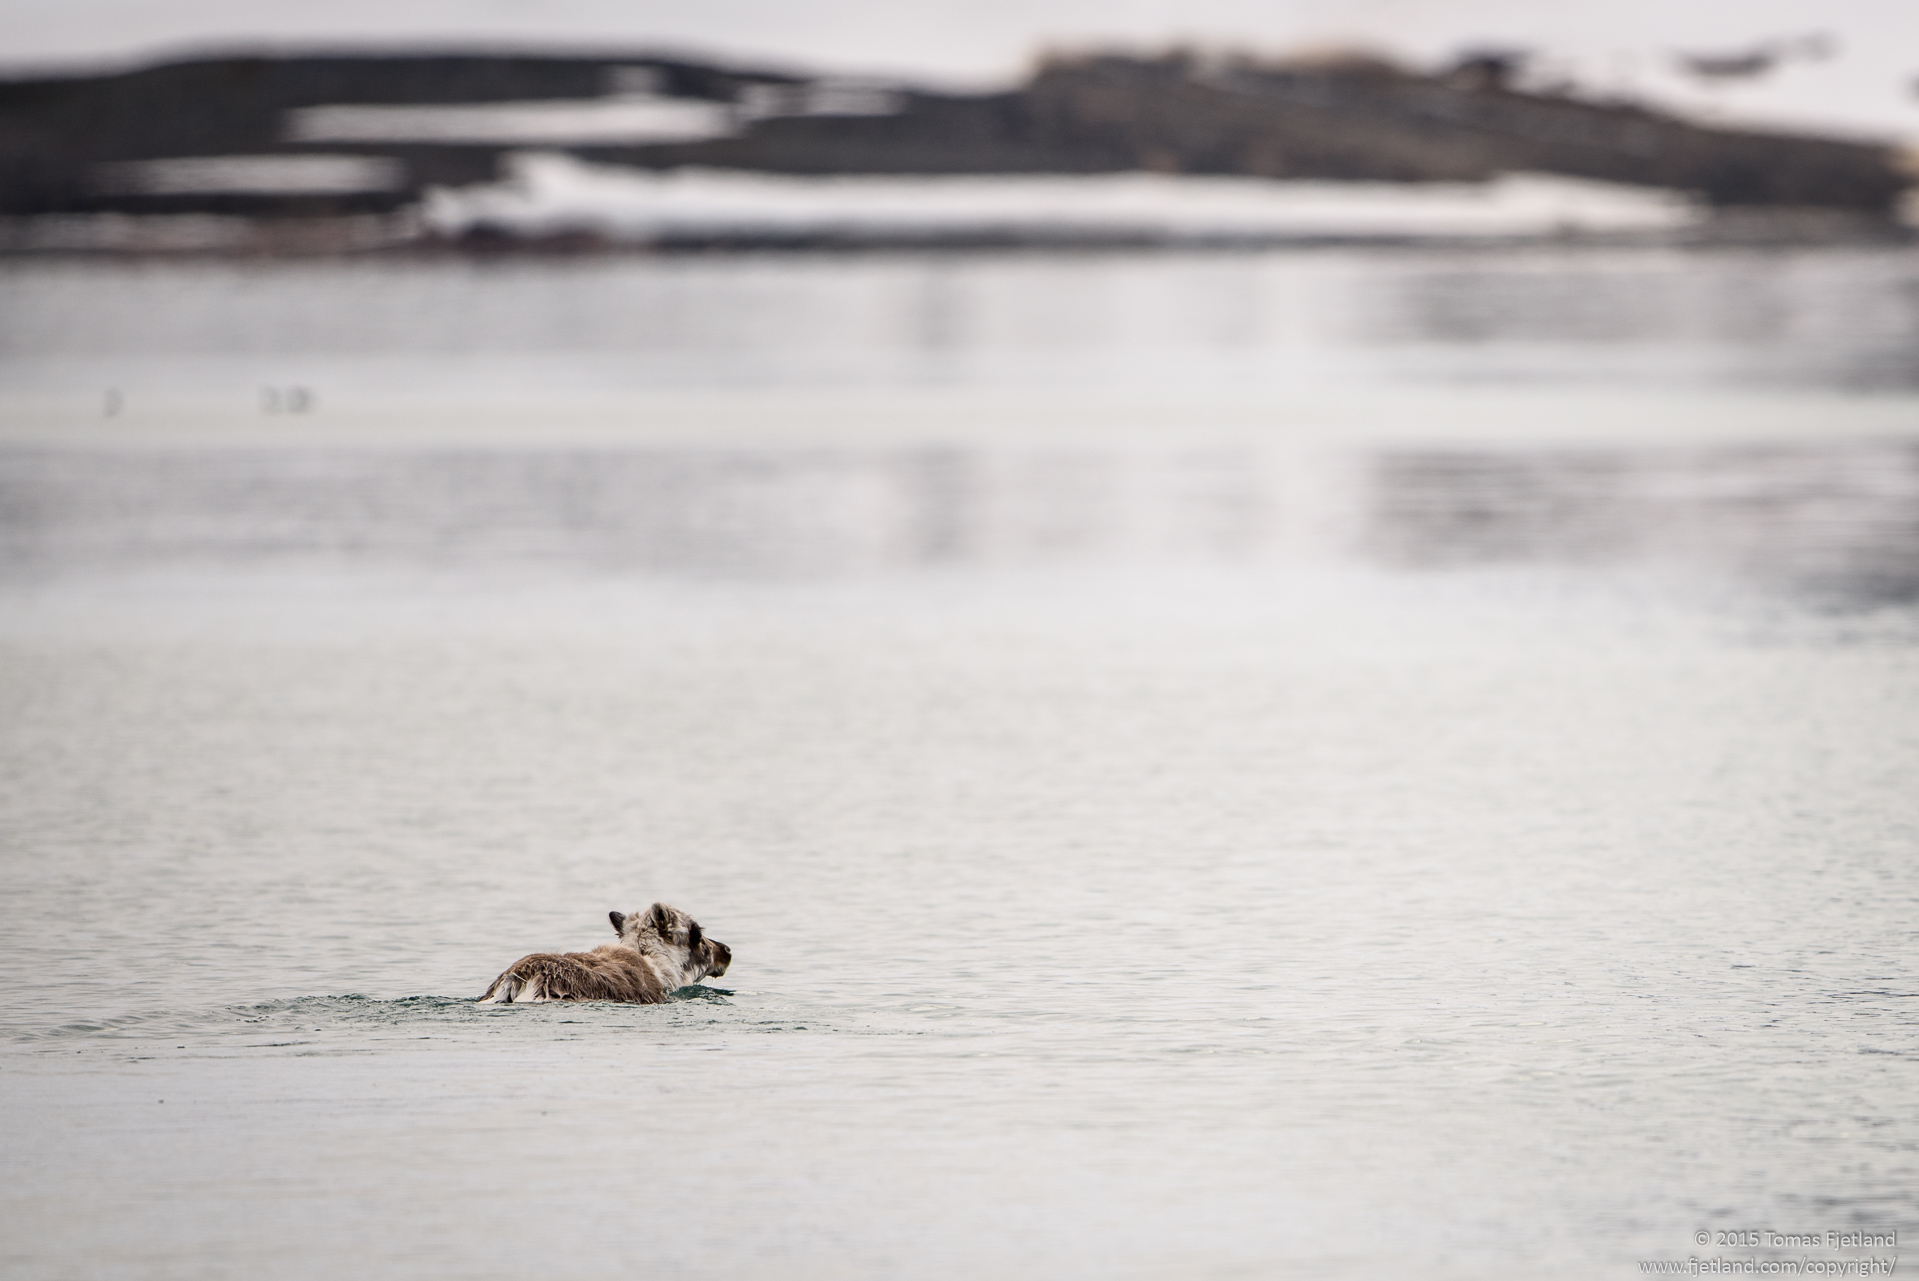 A Svalbard reindeer taking a morning swim across Raudfjorden